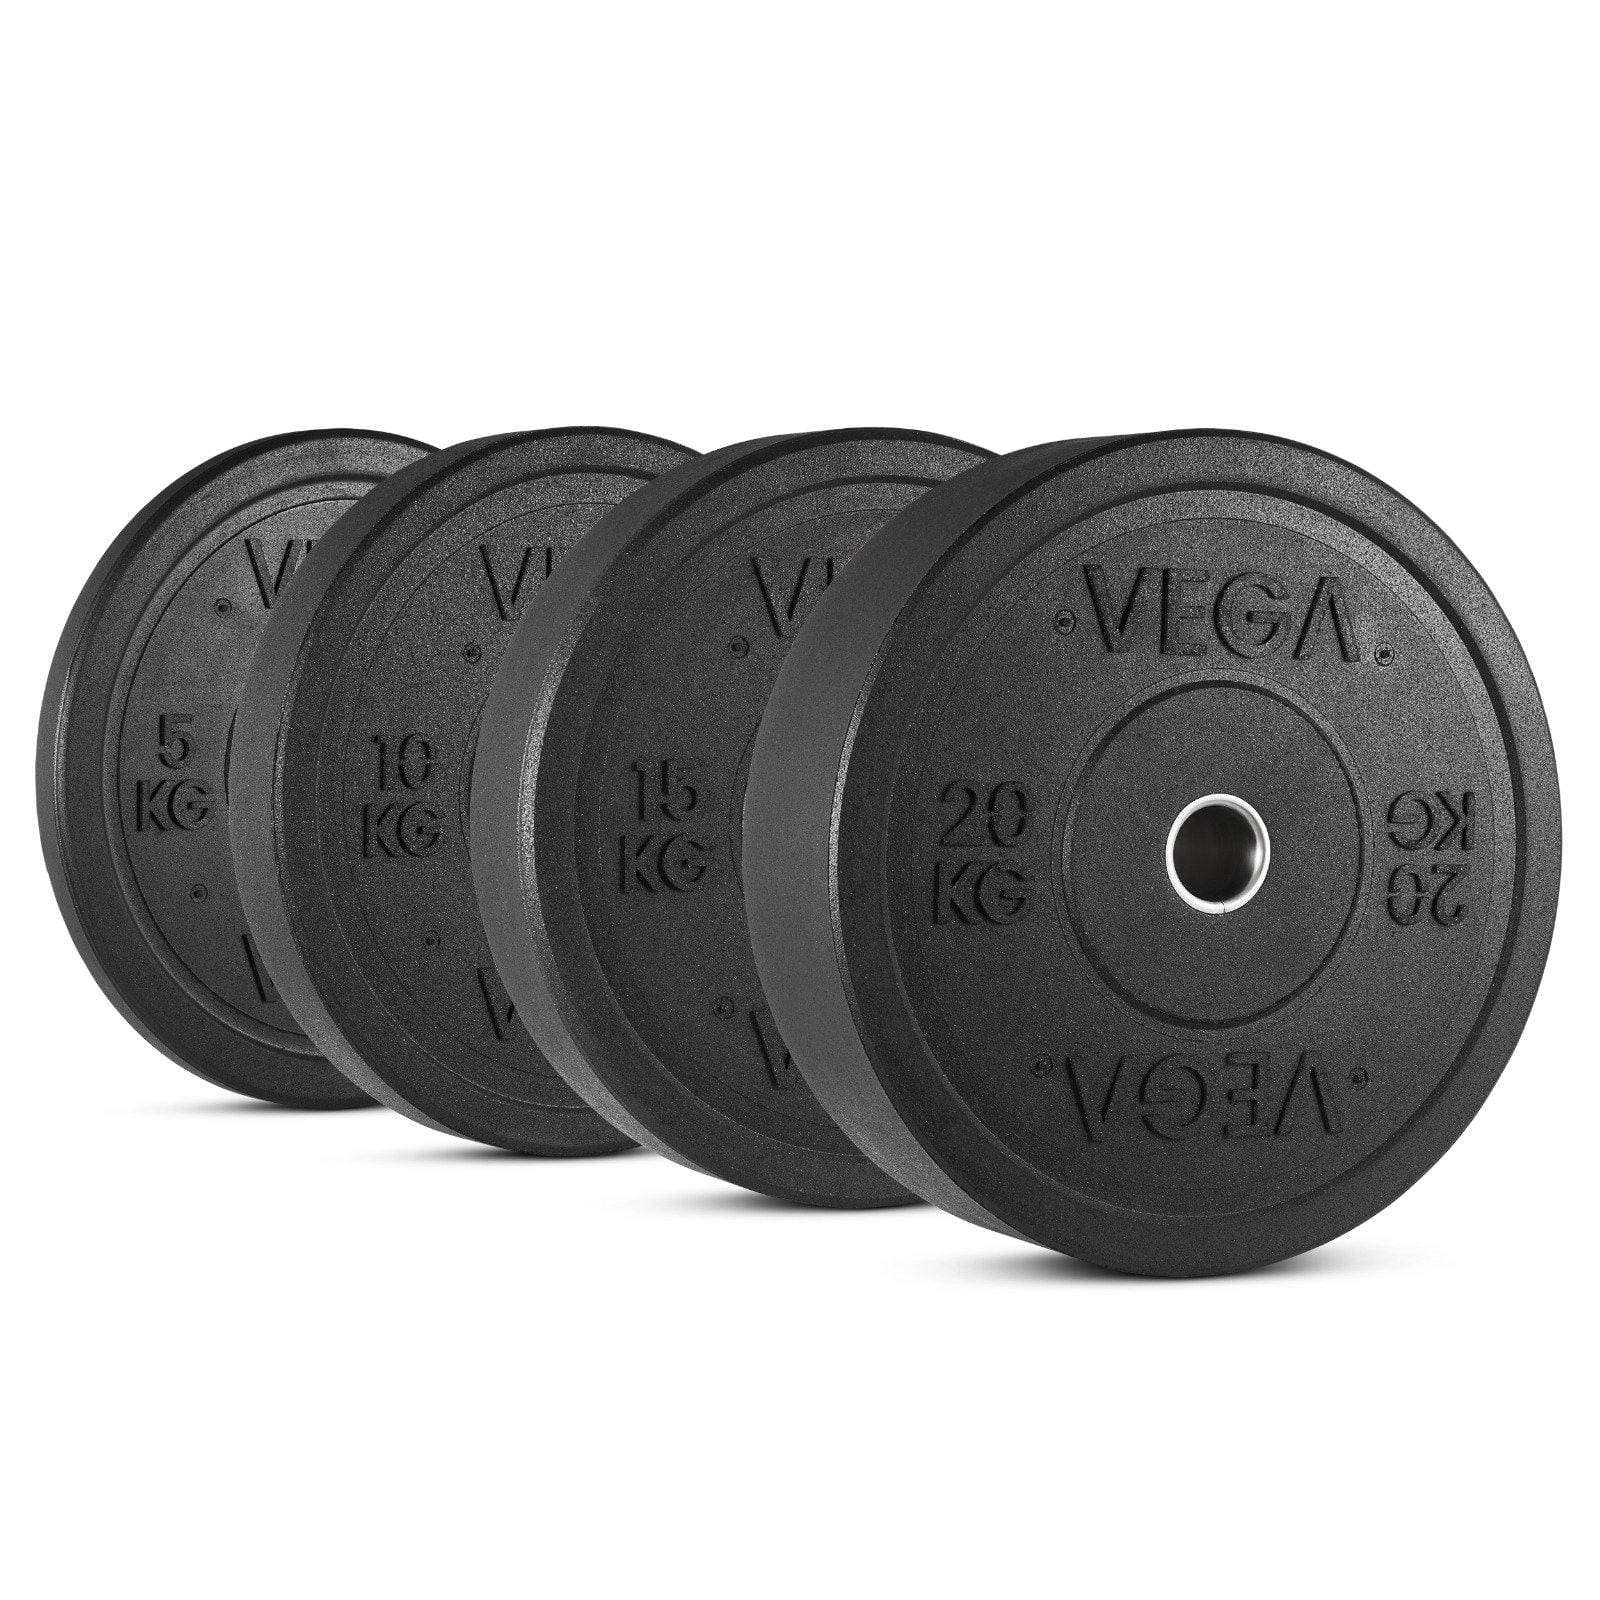 VEGA Fitness 100kg Rubber Bumper Plate Set with 7ft Escape Olympic Power Bar Deals